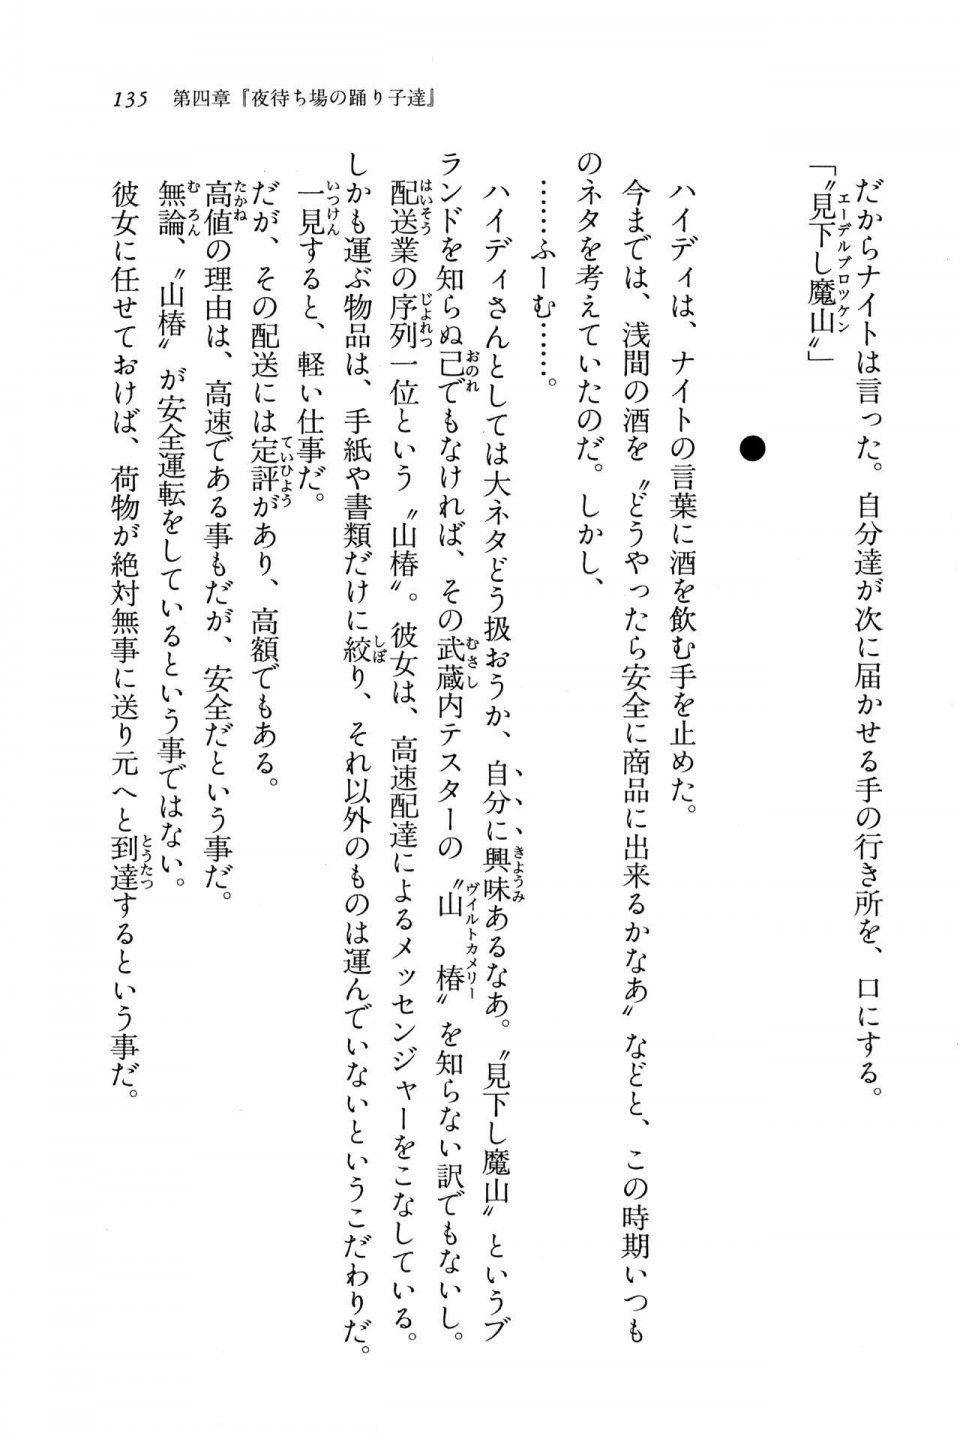 Kyoukai Senjou no Horizon BD Special Mininovel Vol 7(4A) - Photo #139